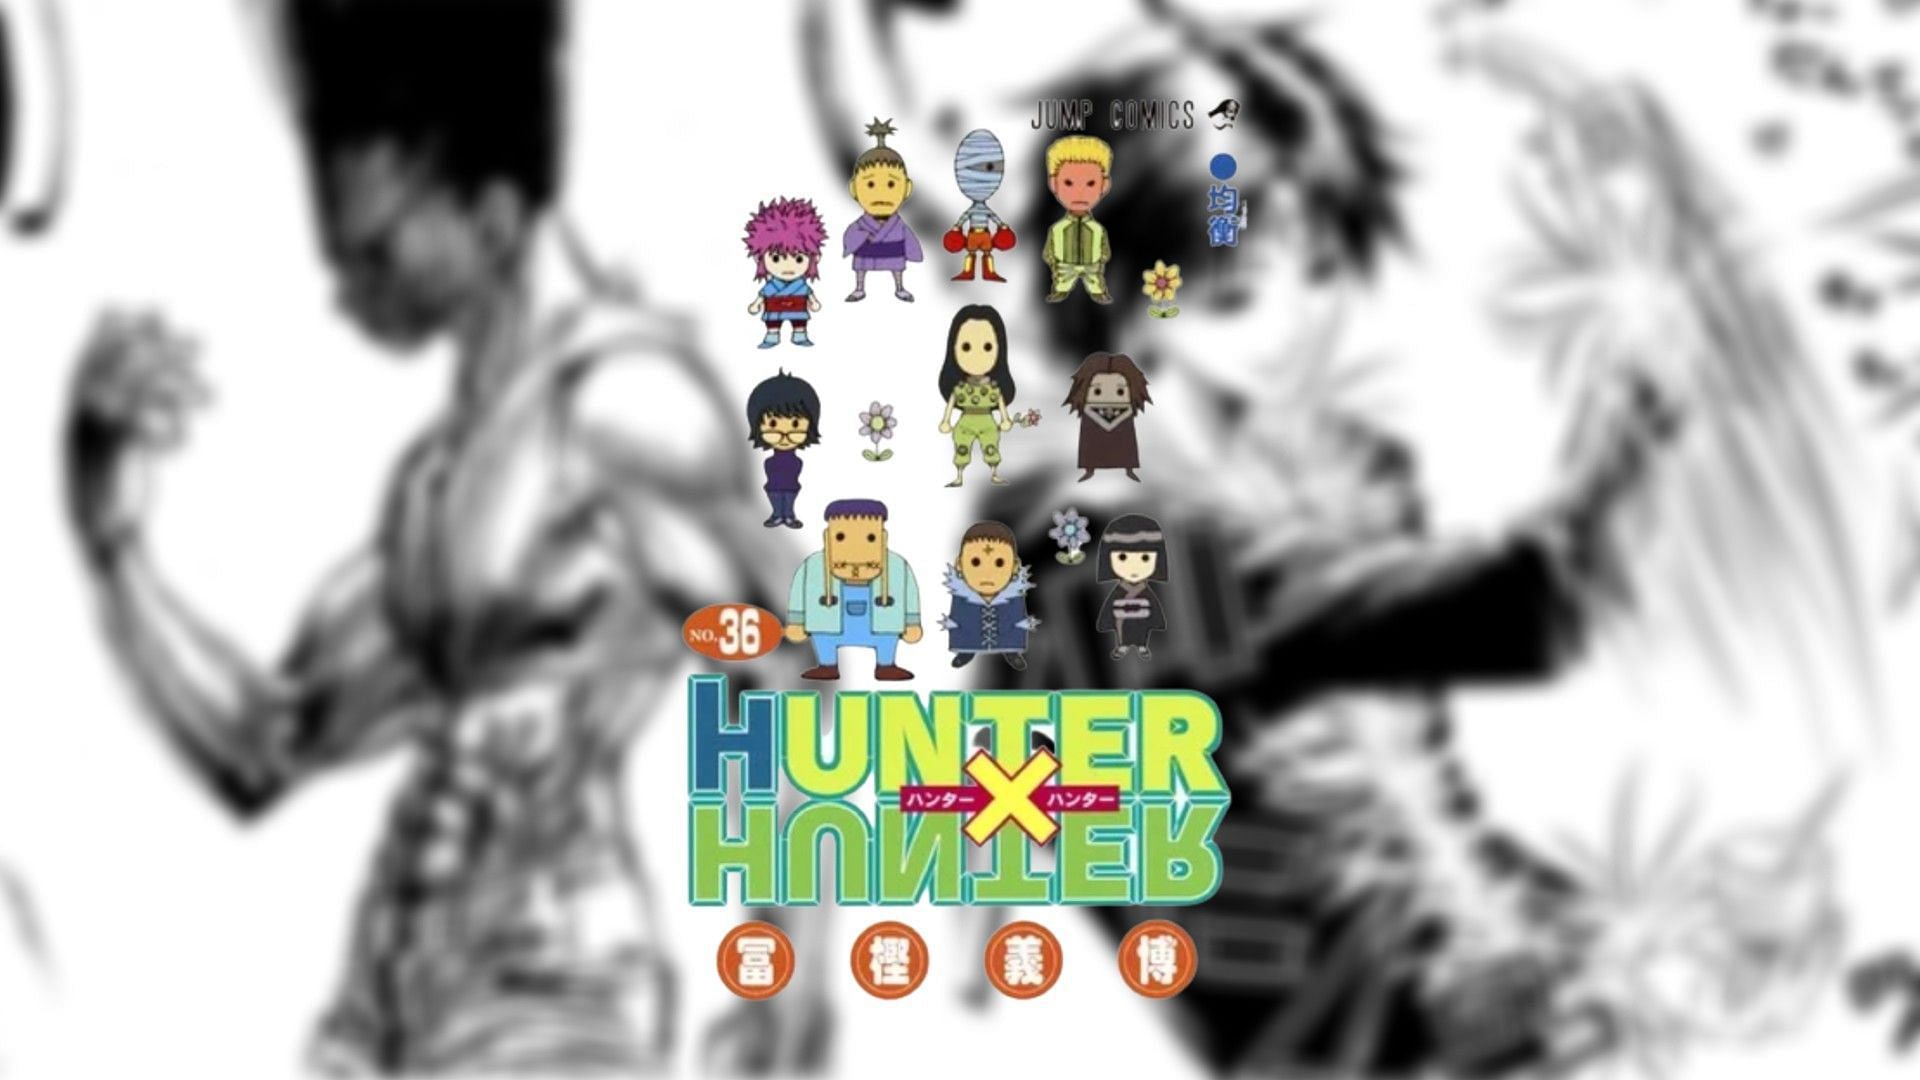 Hunter x Hunter' Creator Yoshihiro Togashi Teases New Chapters